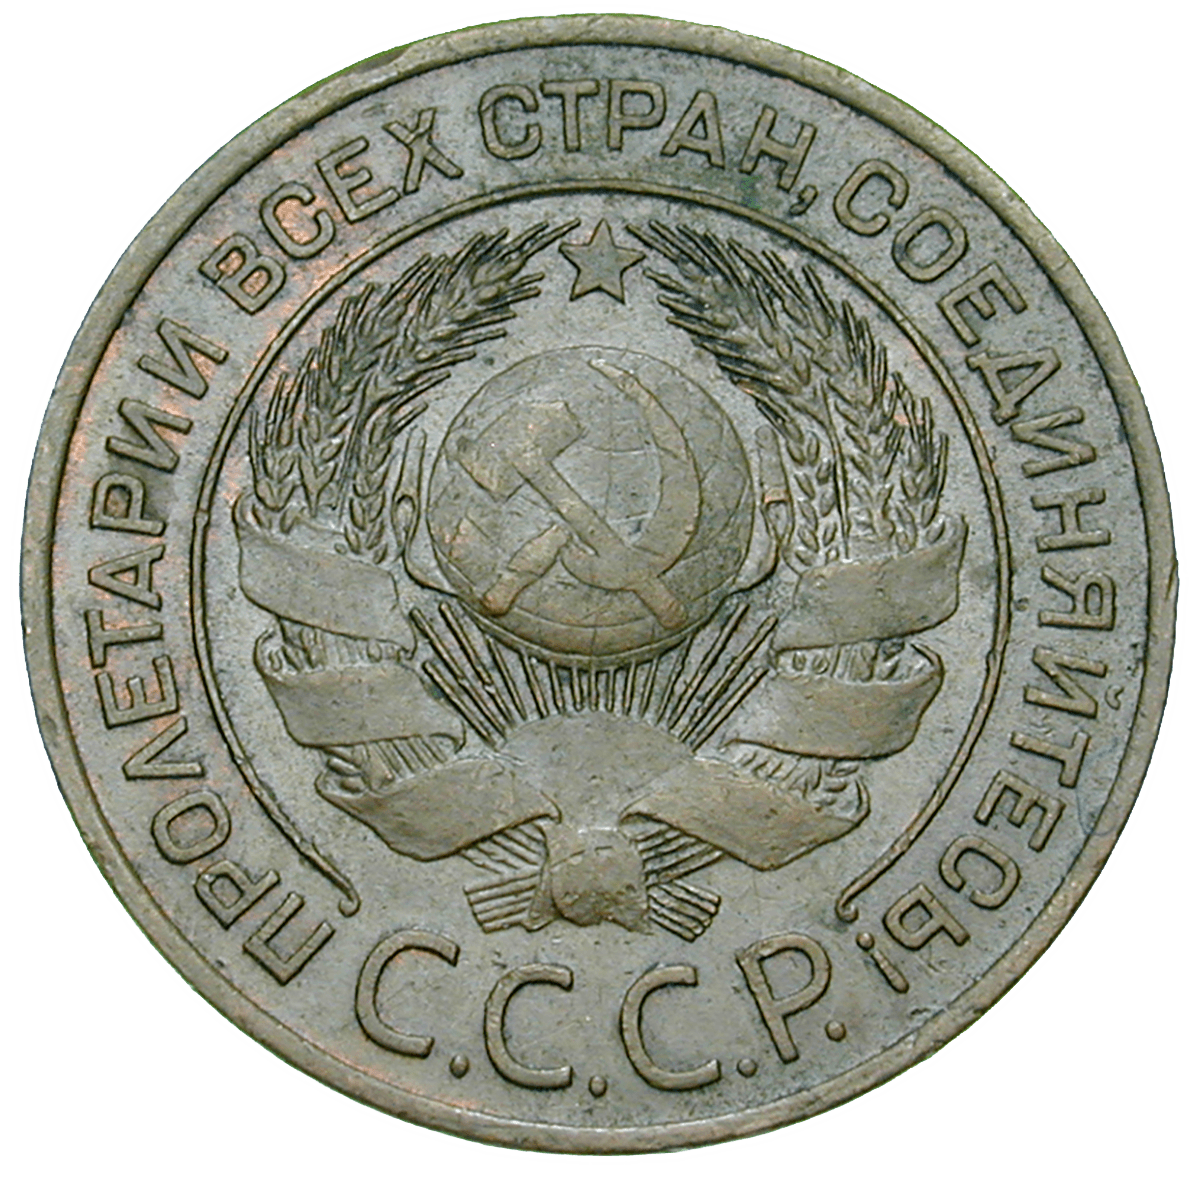 Union of Soviet Socialist Republics, 3 Kopecks 1924 (obverse)